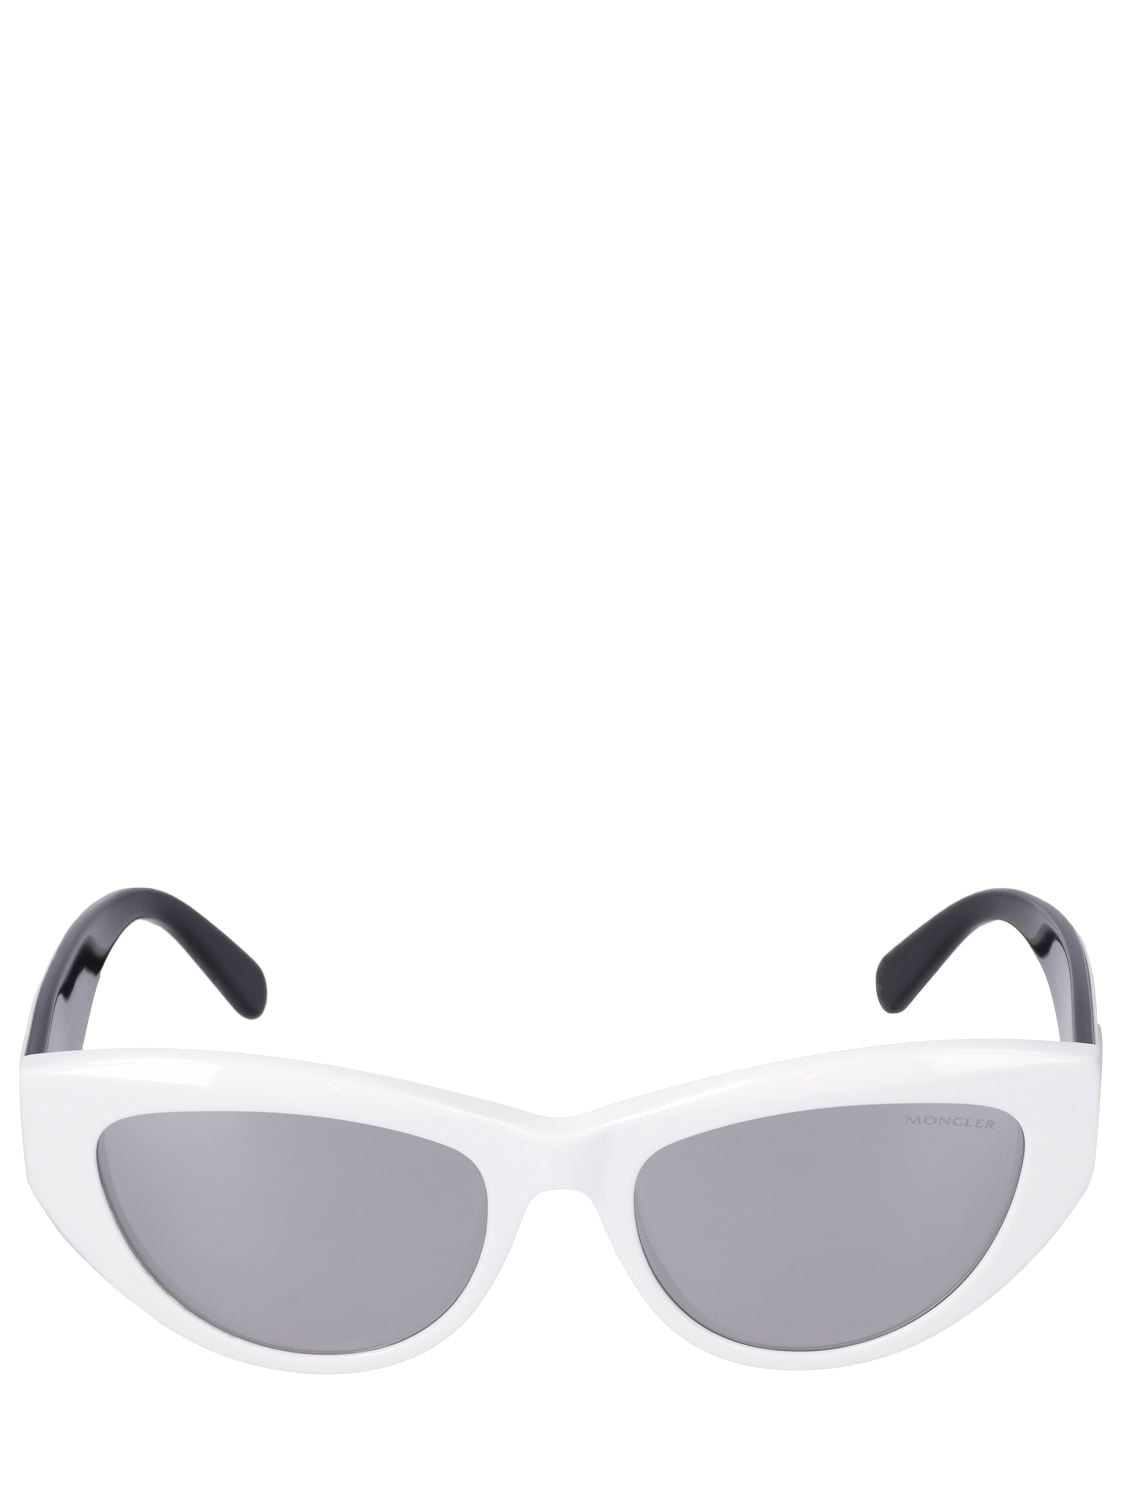 Image of Modd Sunglasses